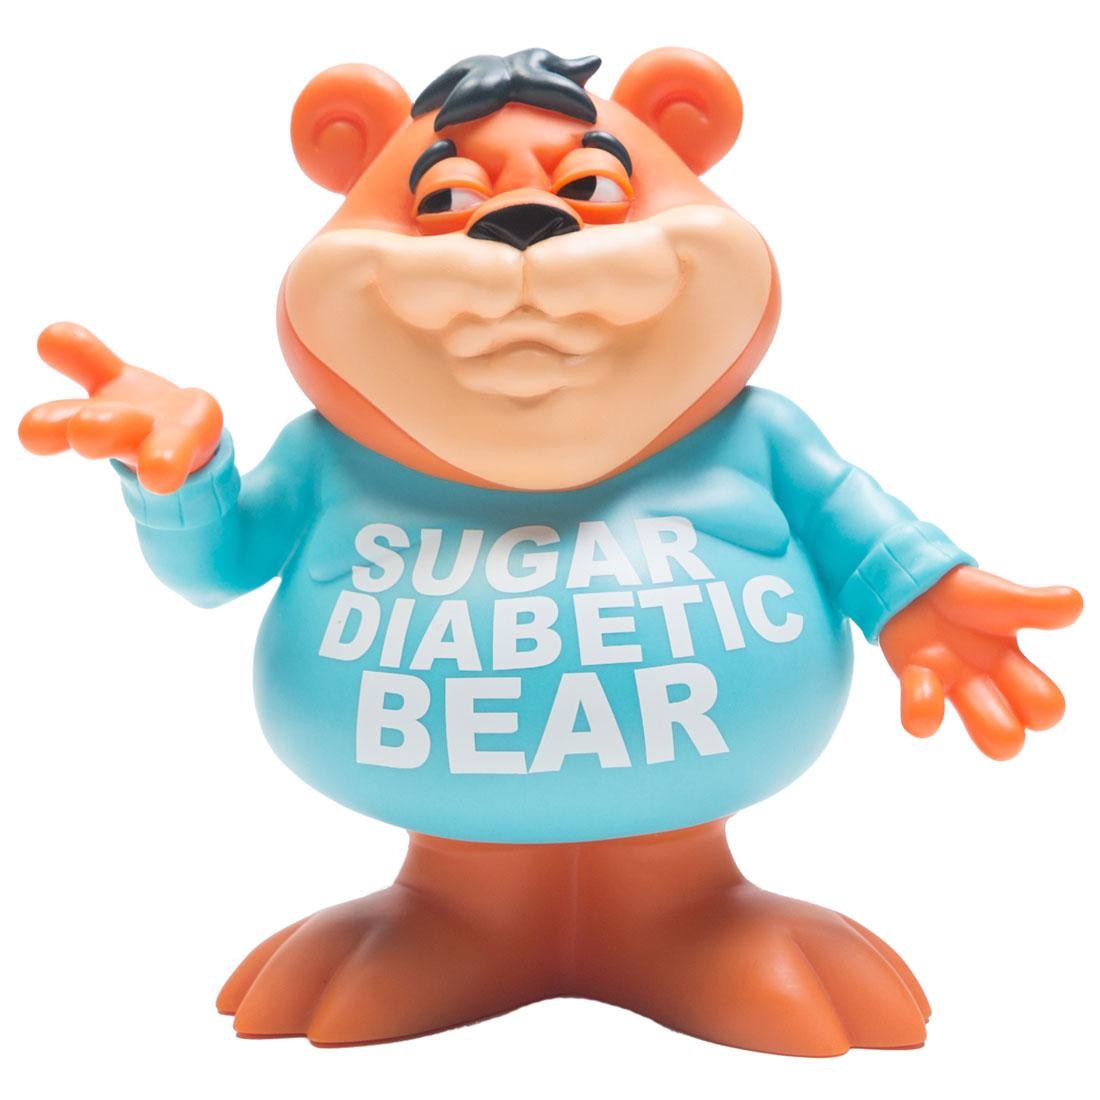 Sugar Diabetic Bear by Ron English